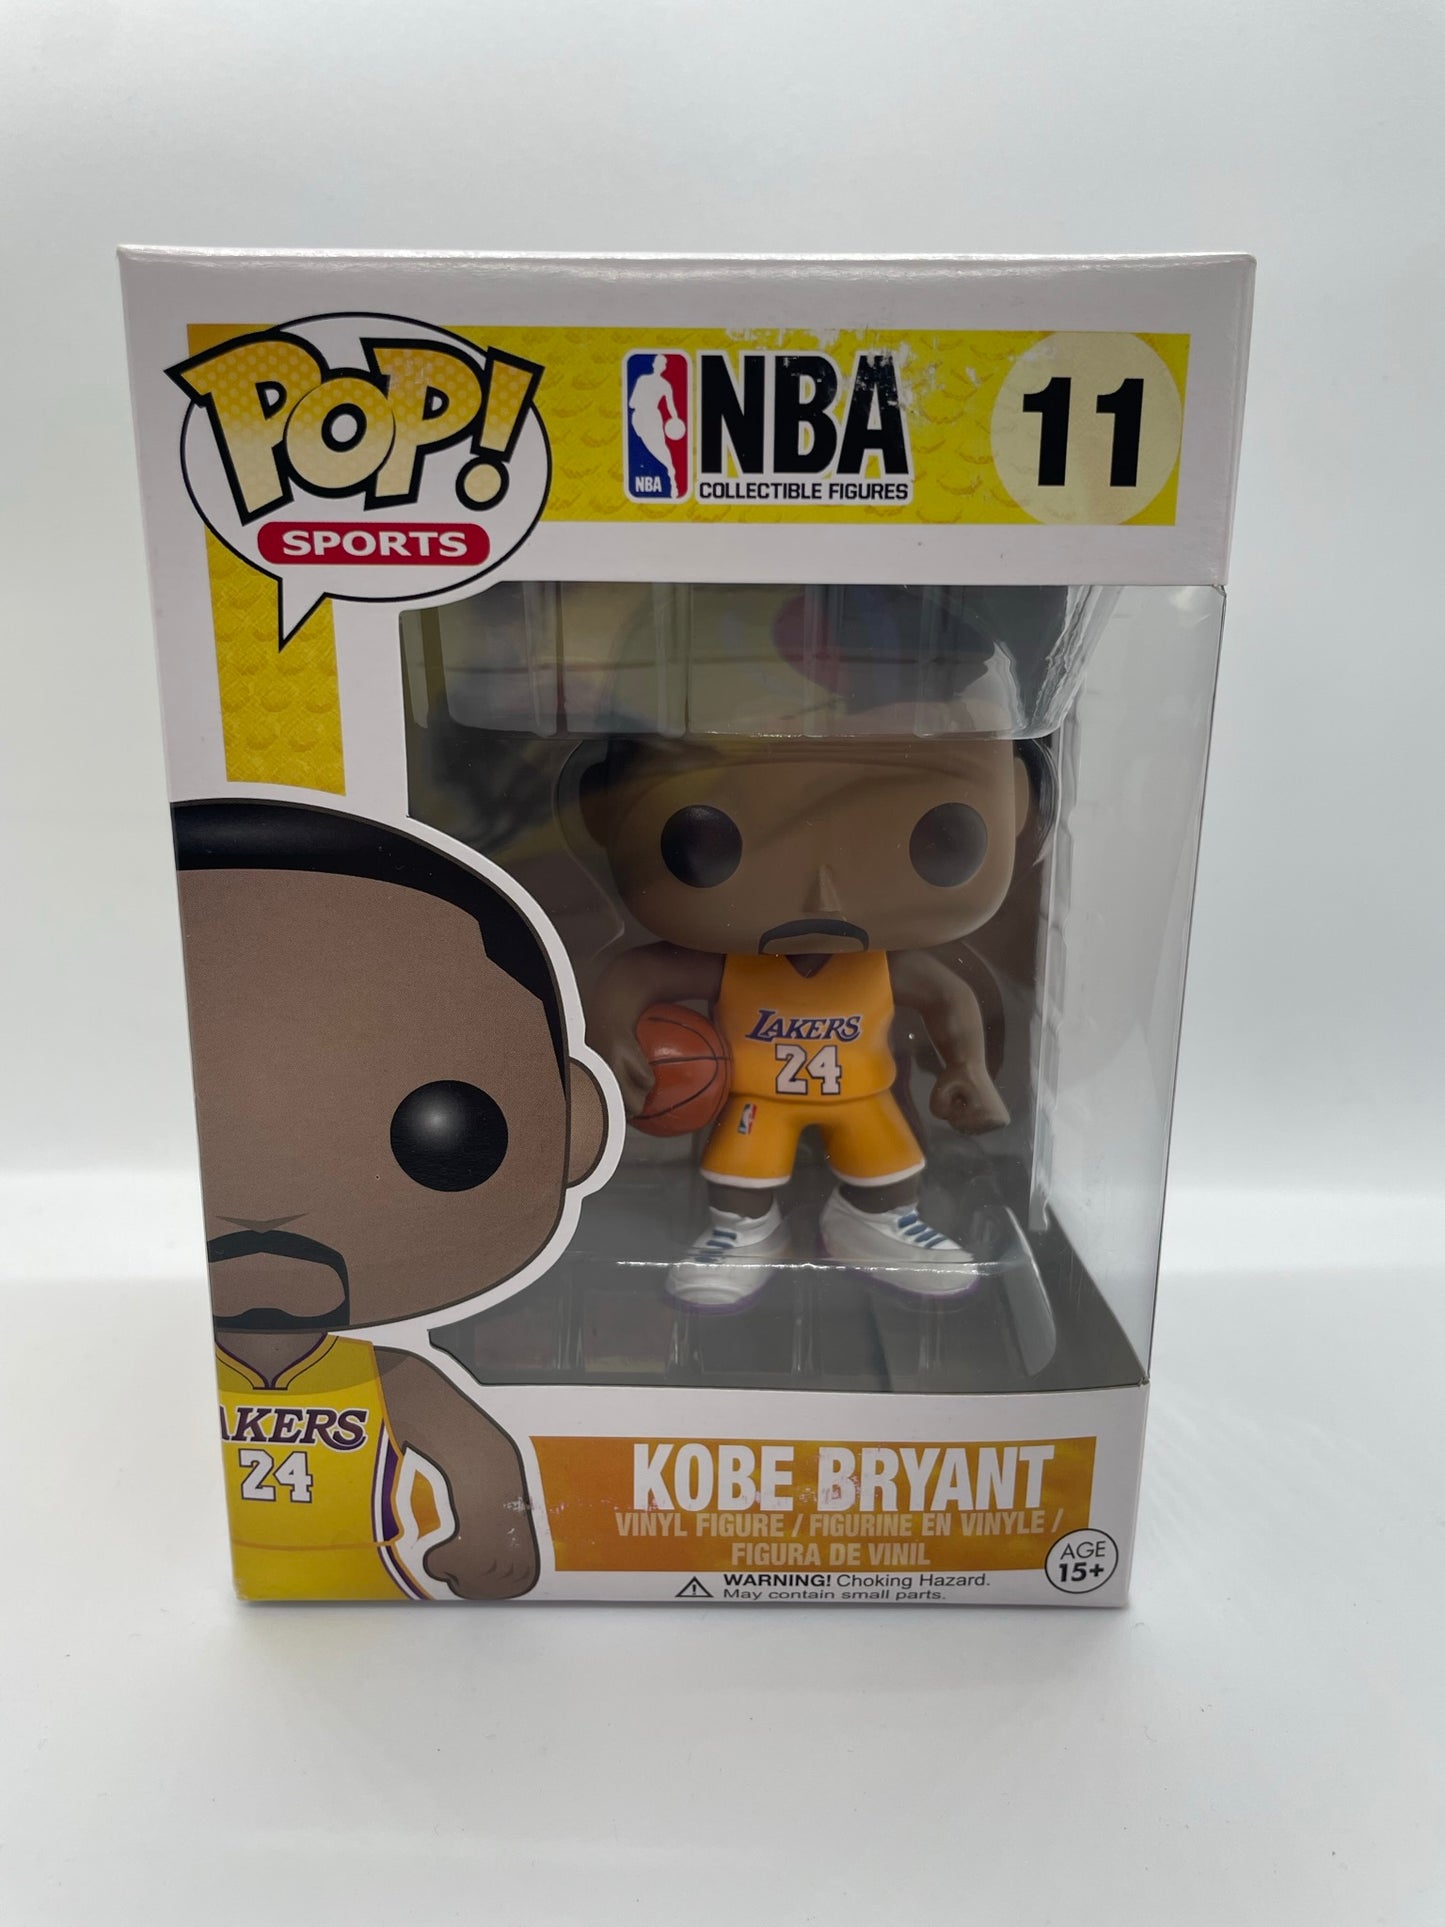 Sold 10/29 - 2016 Kobe Bryant PopLife 11 Home #24 Jersey